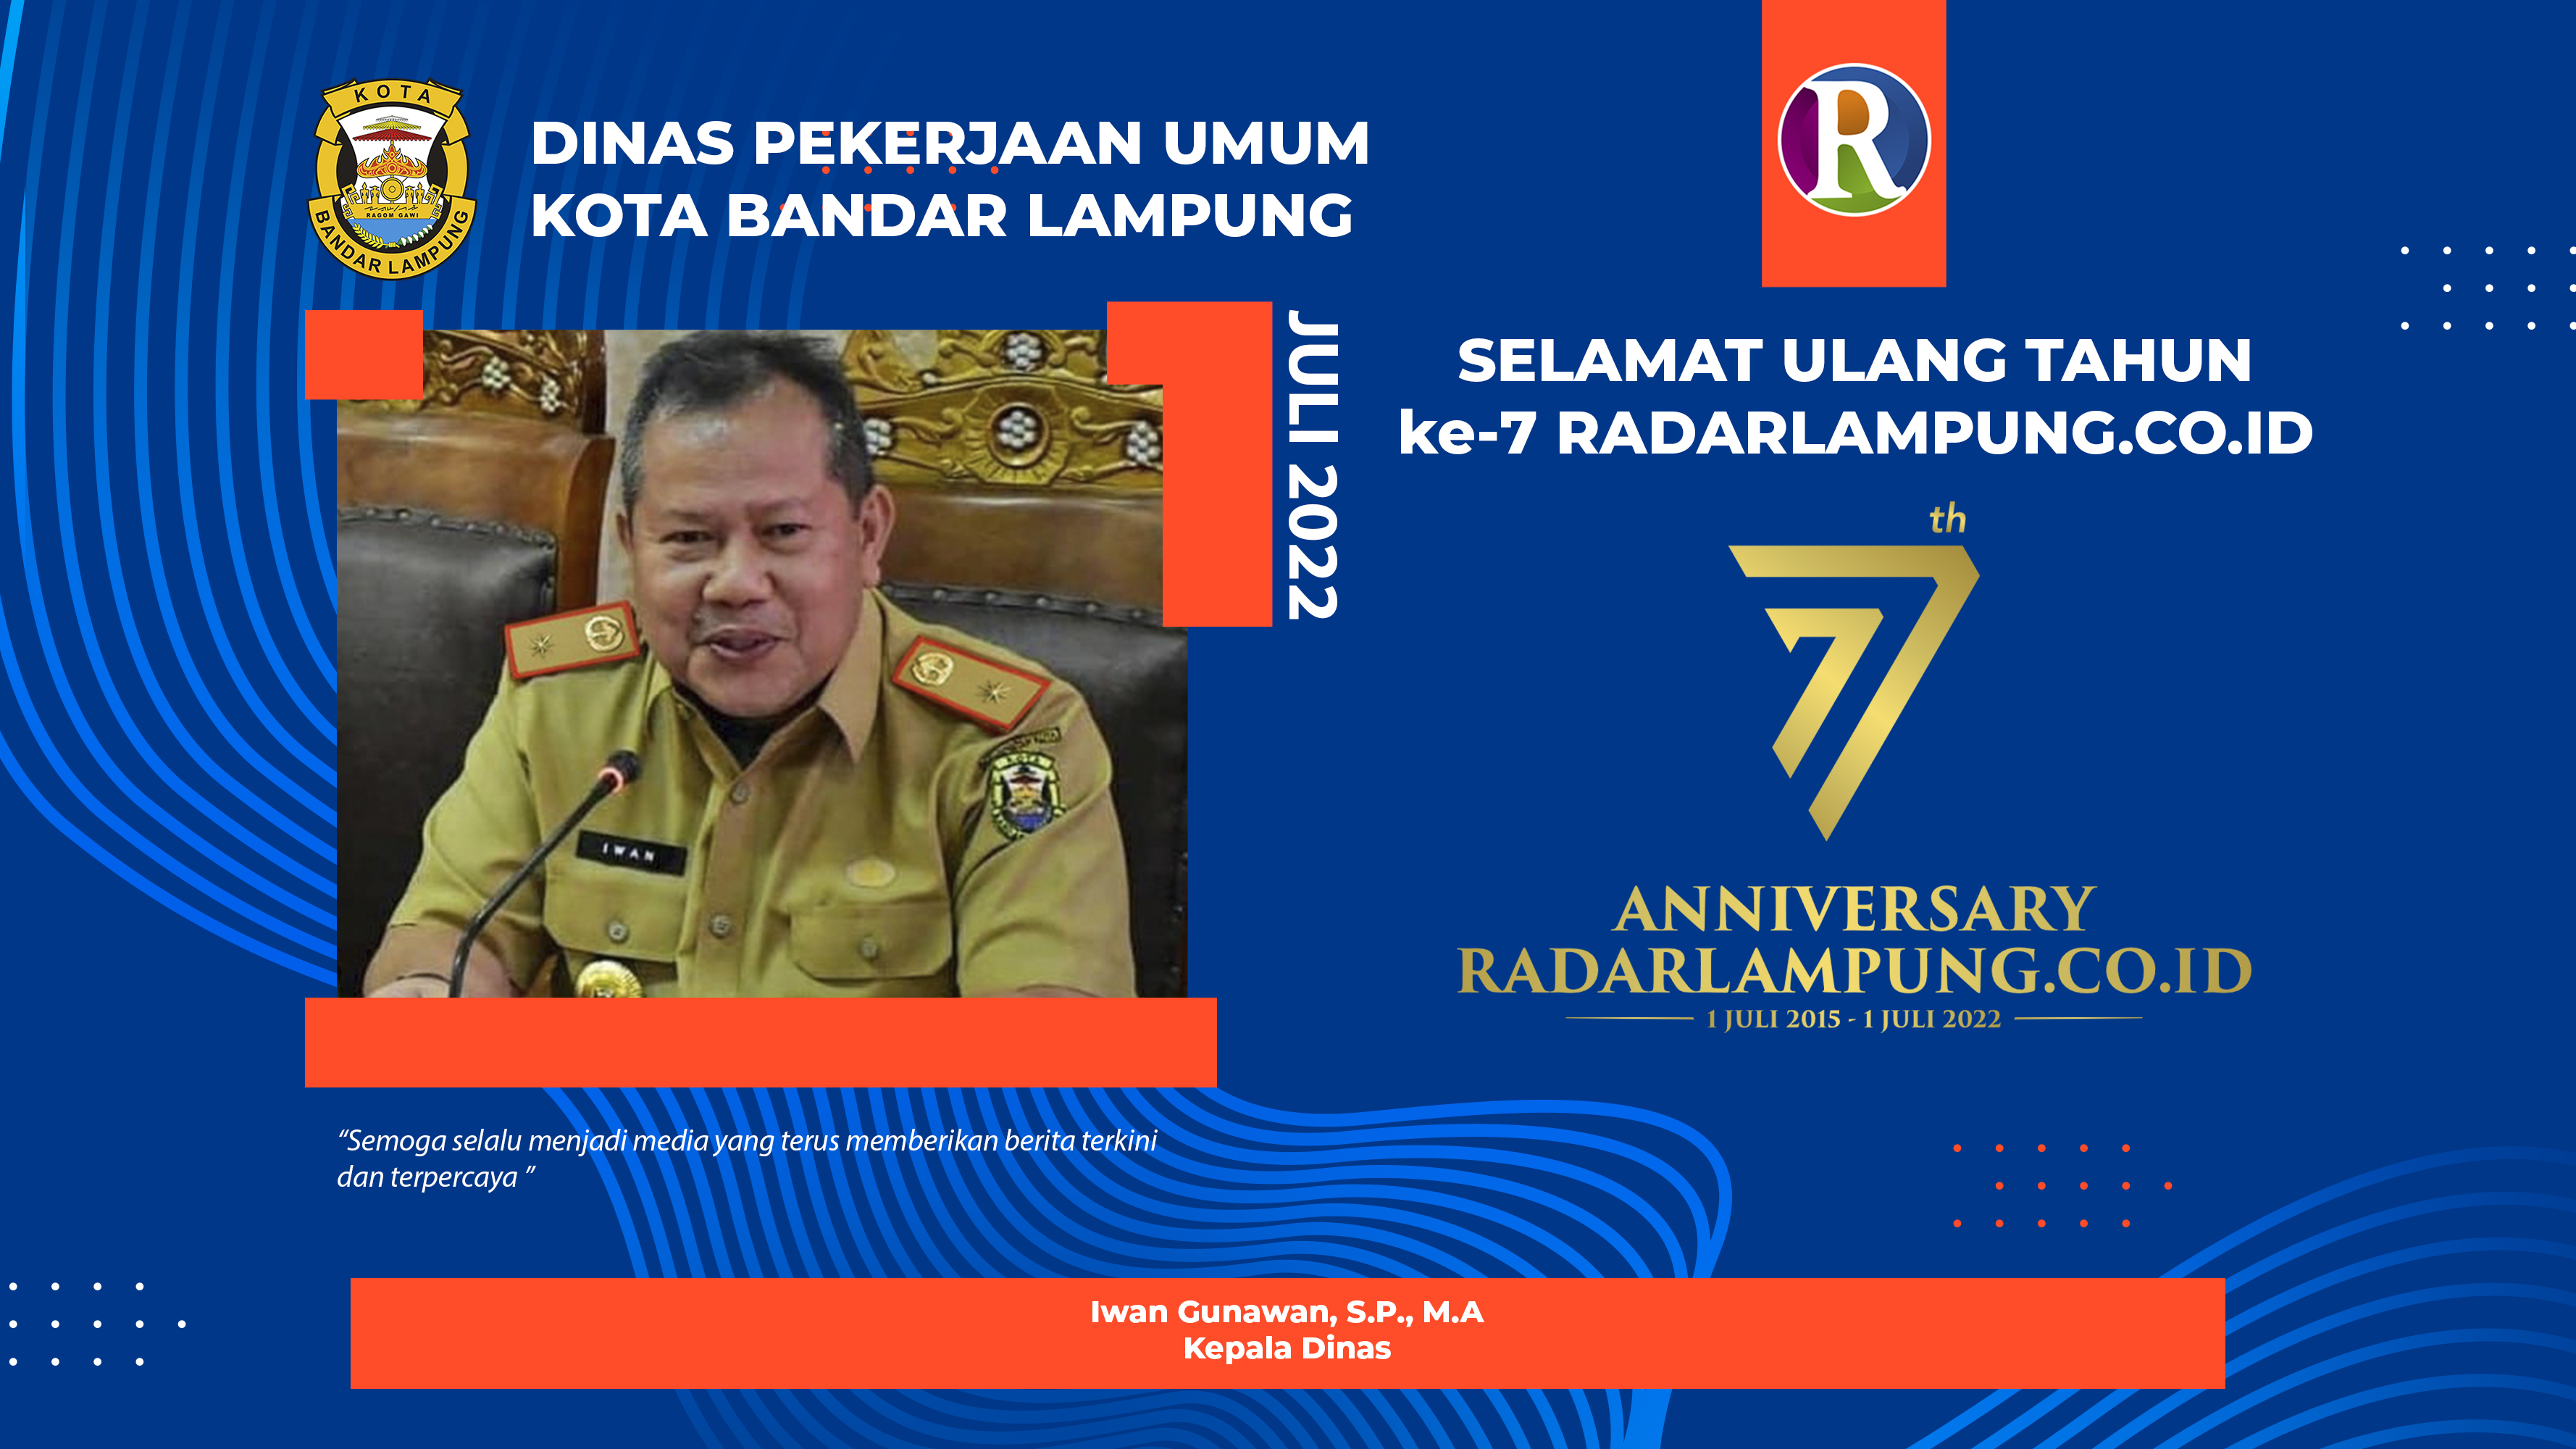 Dinas Pekerjaan Umum Bandar Lampung Mengucapkan Selamat Ulang Tahun ke-7 Radarlampung.co.id